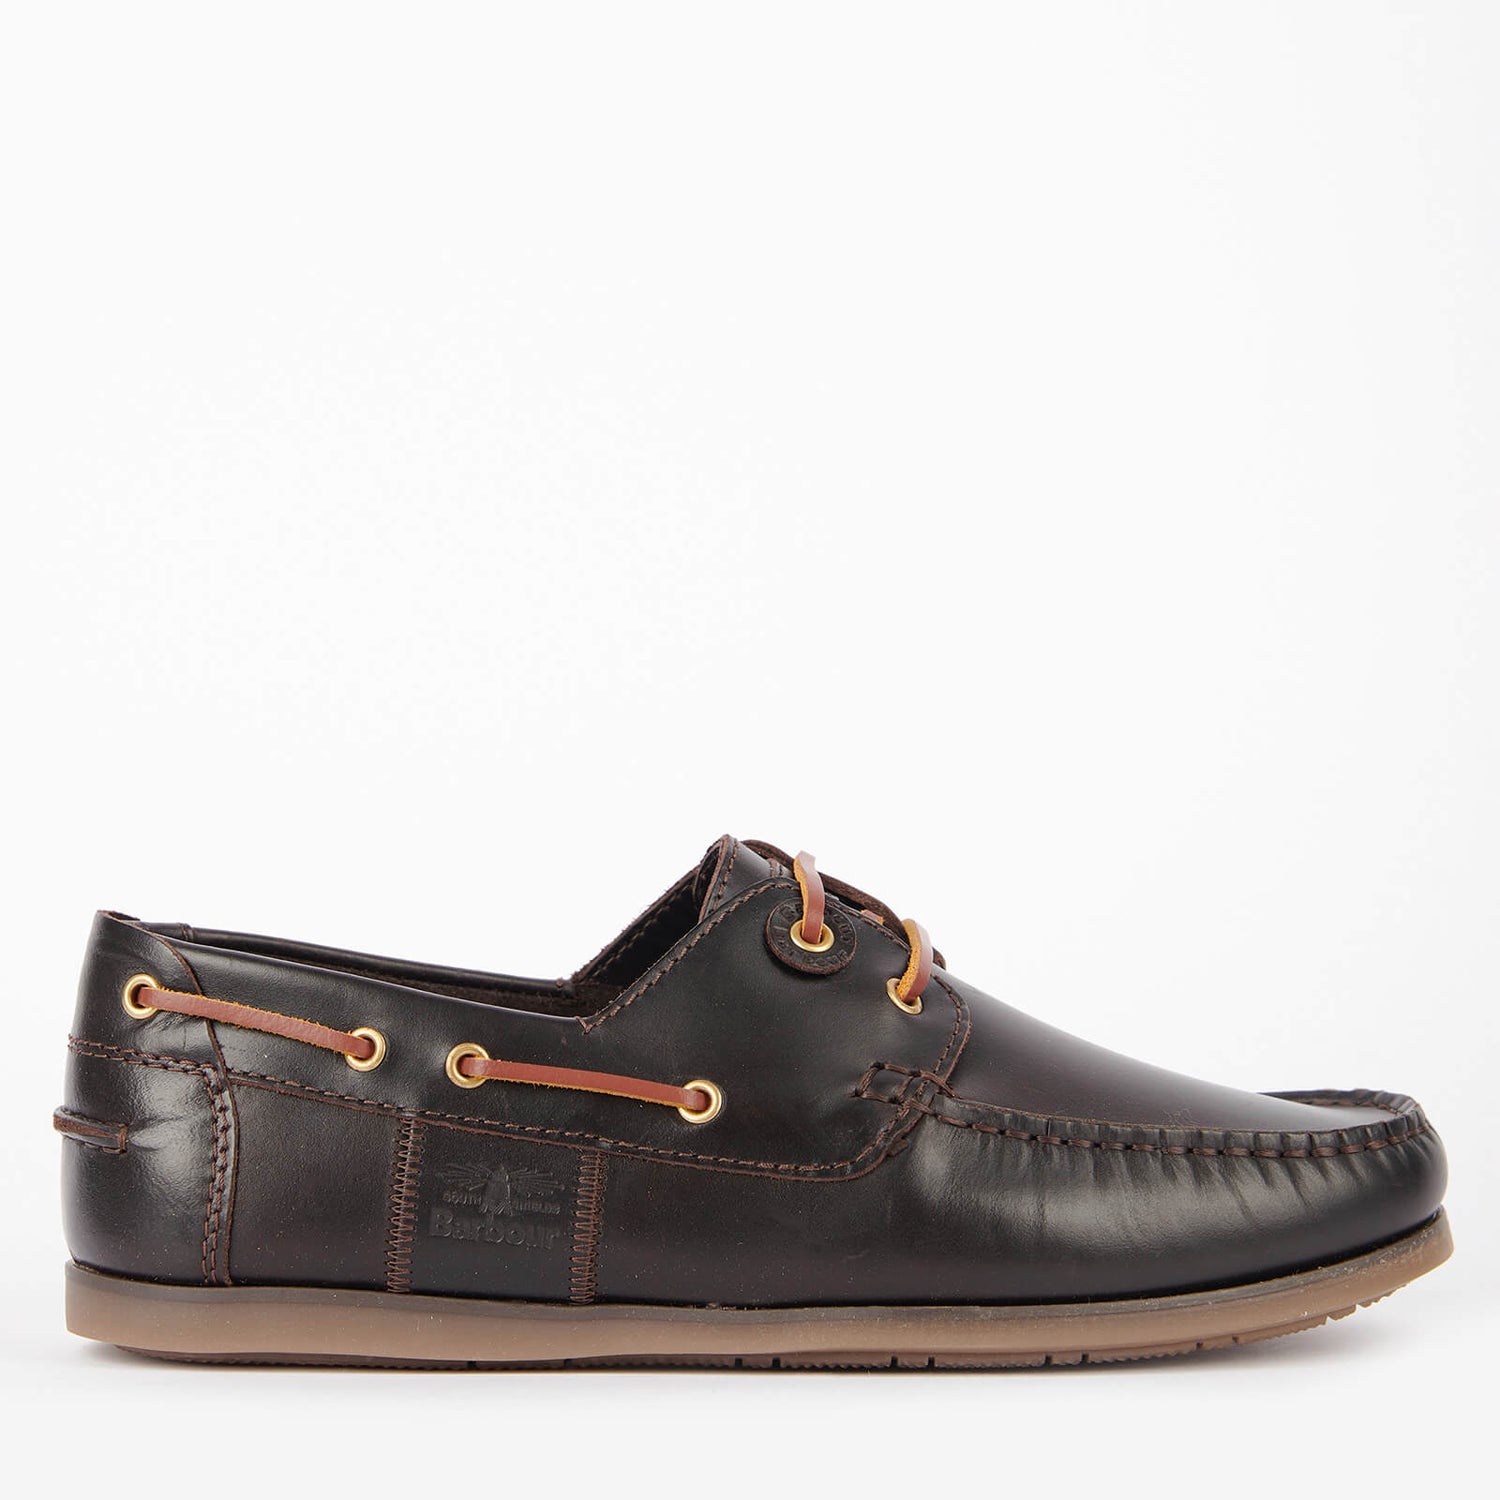 Barbour Men's Capstan Leather Boat Shoes - Dark Brown